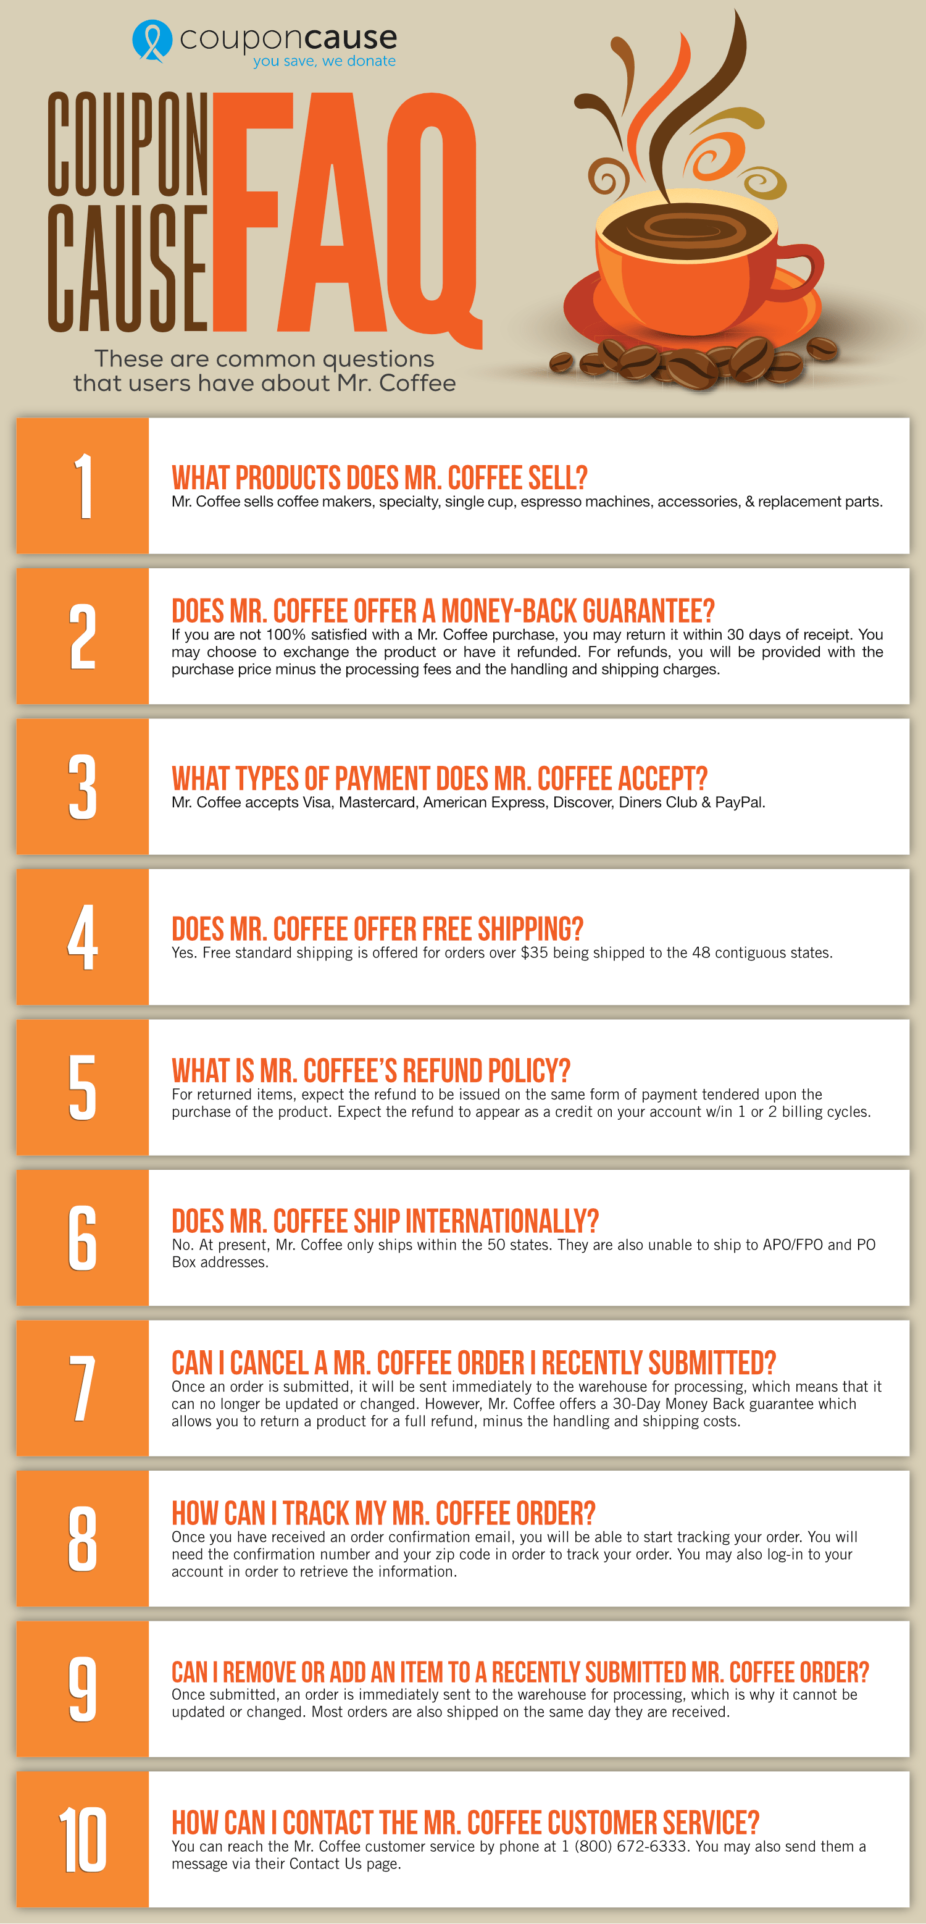 Mr. Coffee Coupon Cause FAQ (C.C. FAQ)